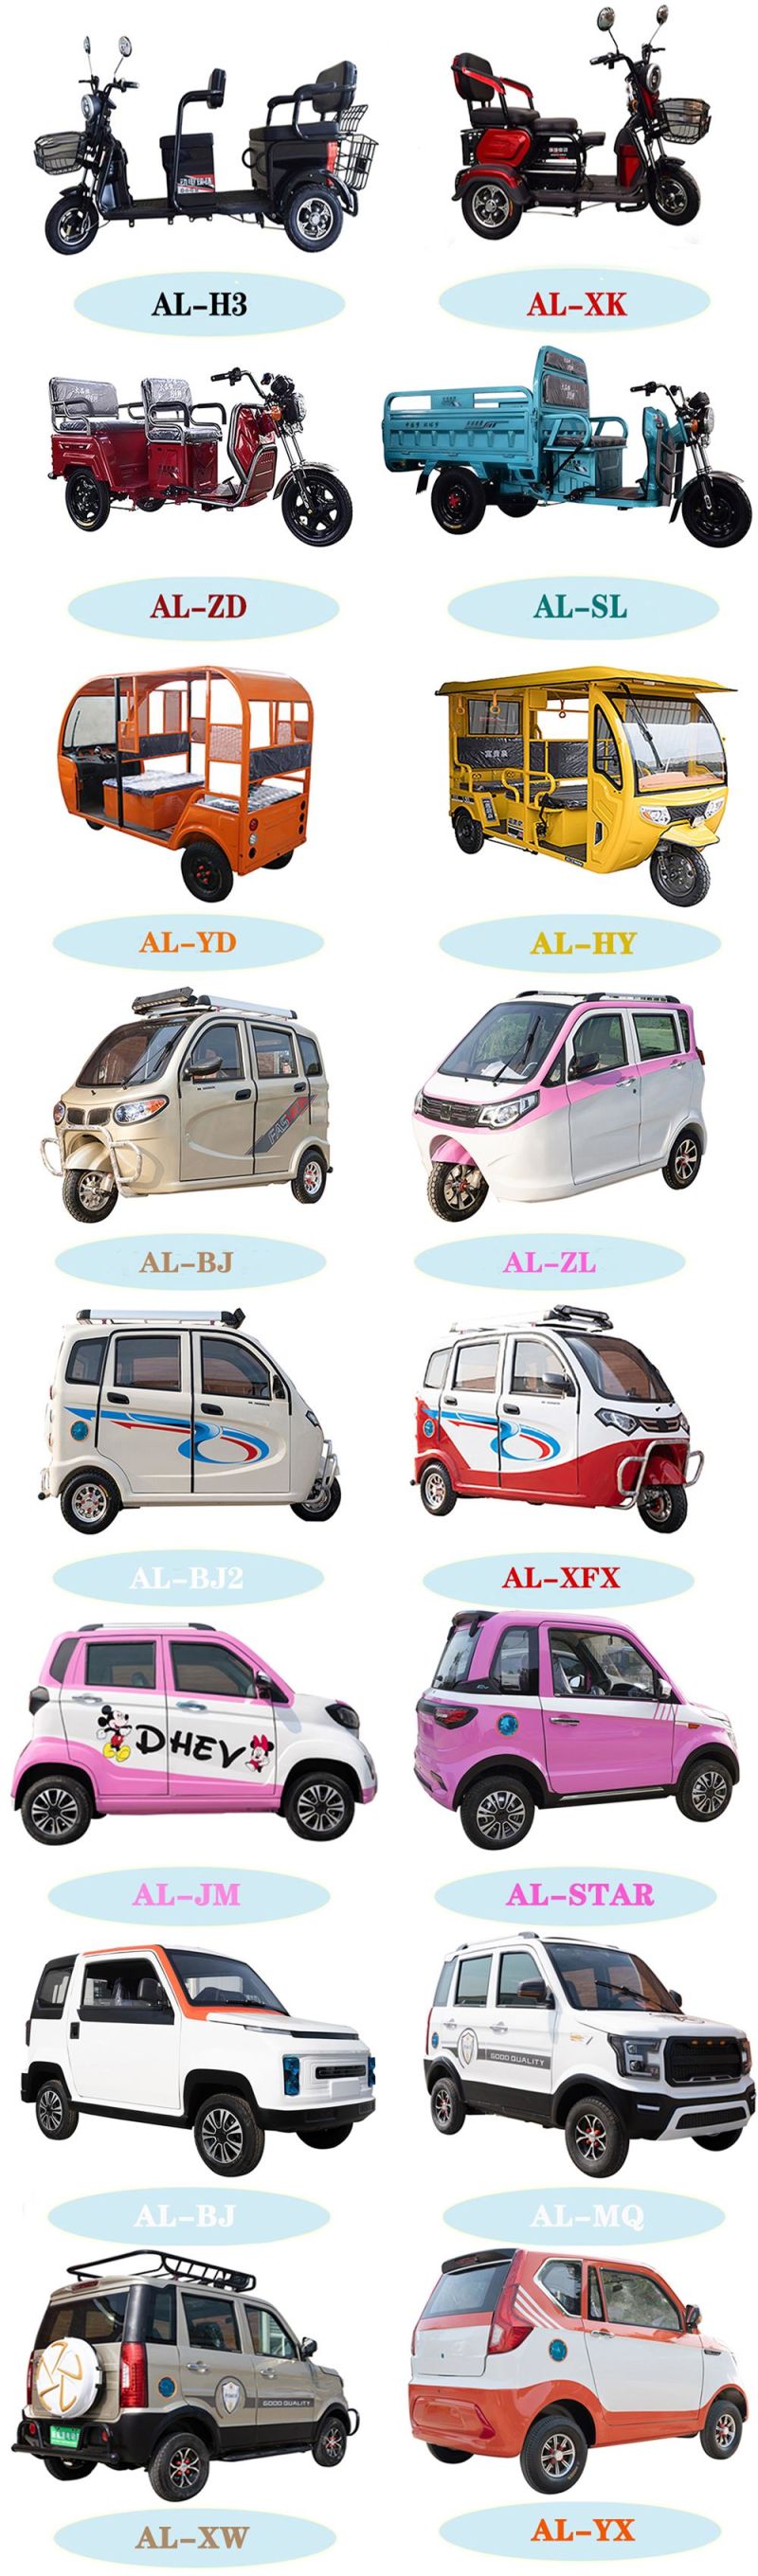 Al-Xfx 3 Wheels Passenger Auto Rickshaw in India